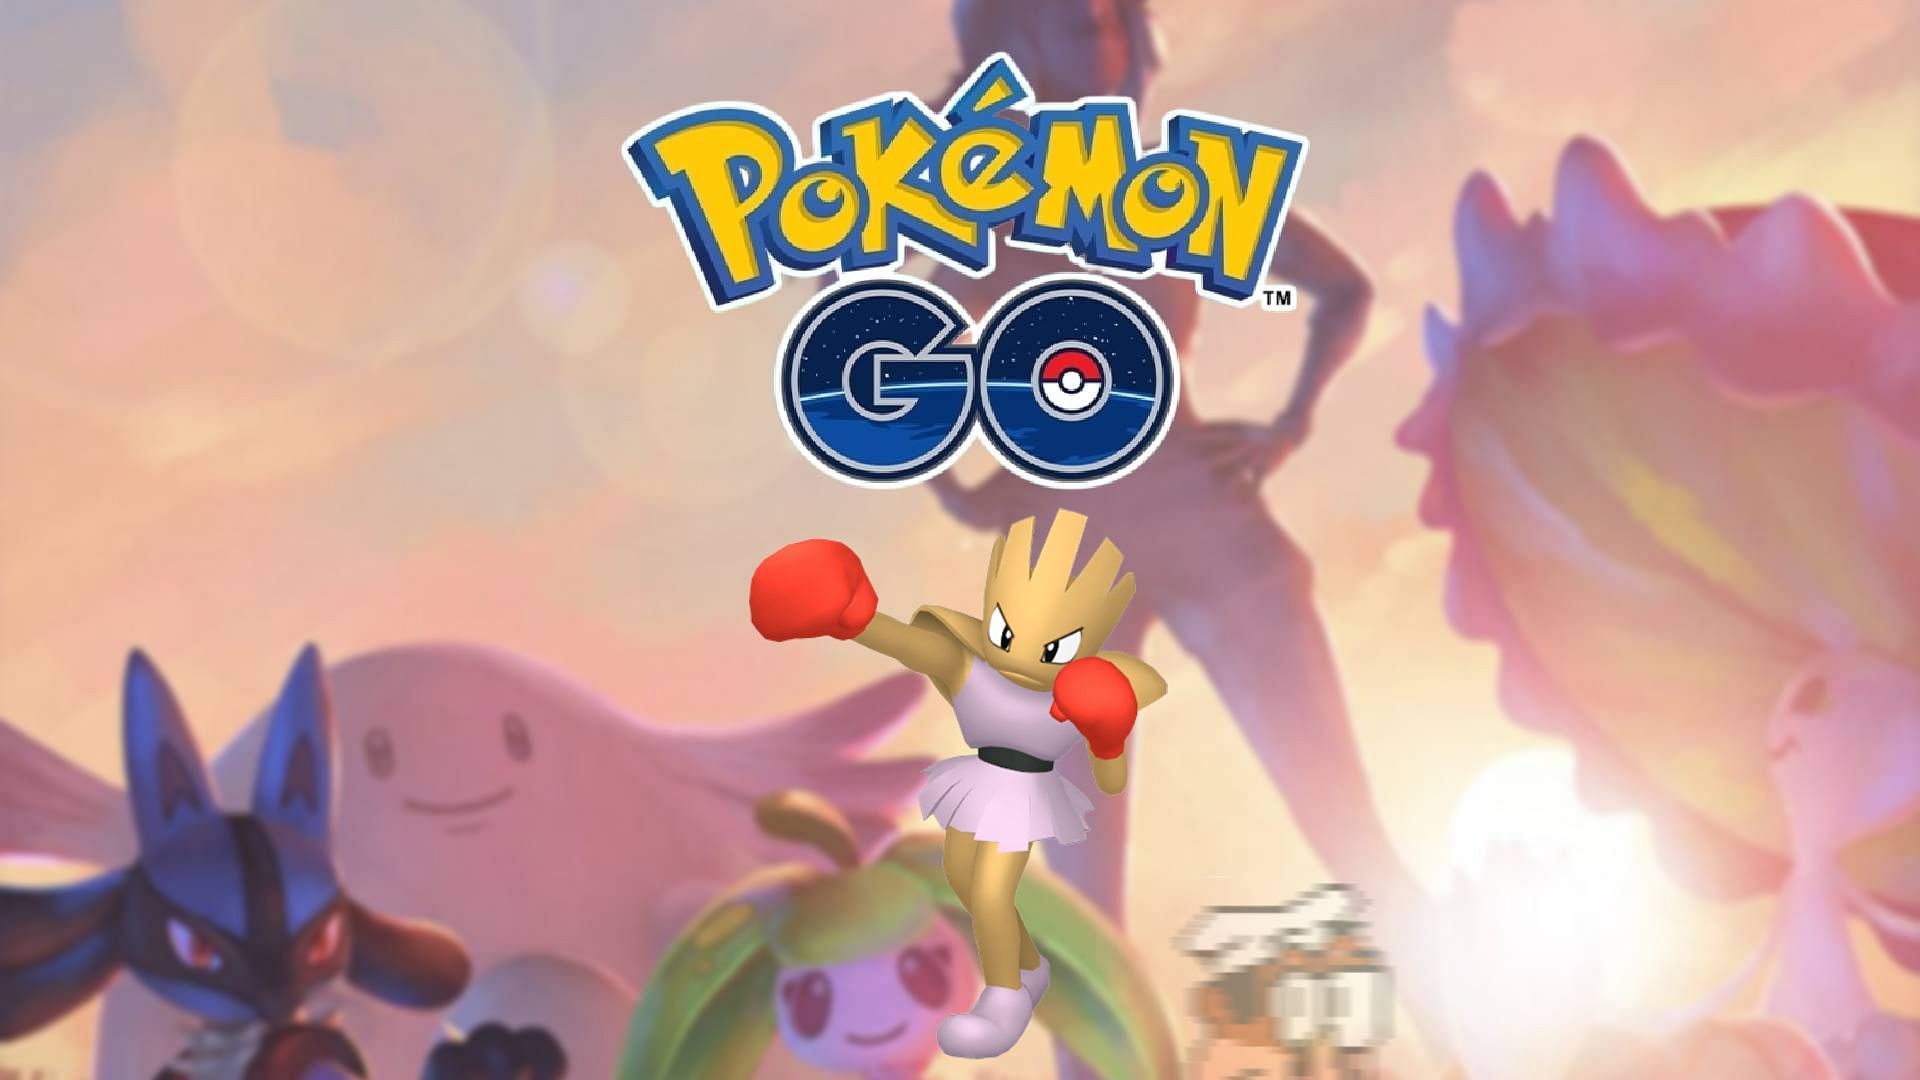 Official artwork for Pokemon GO (Image via Niantic)